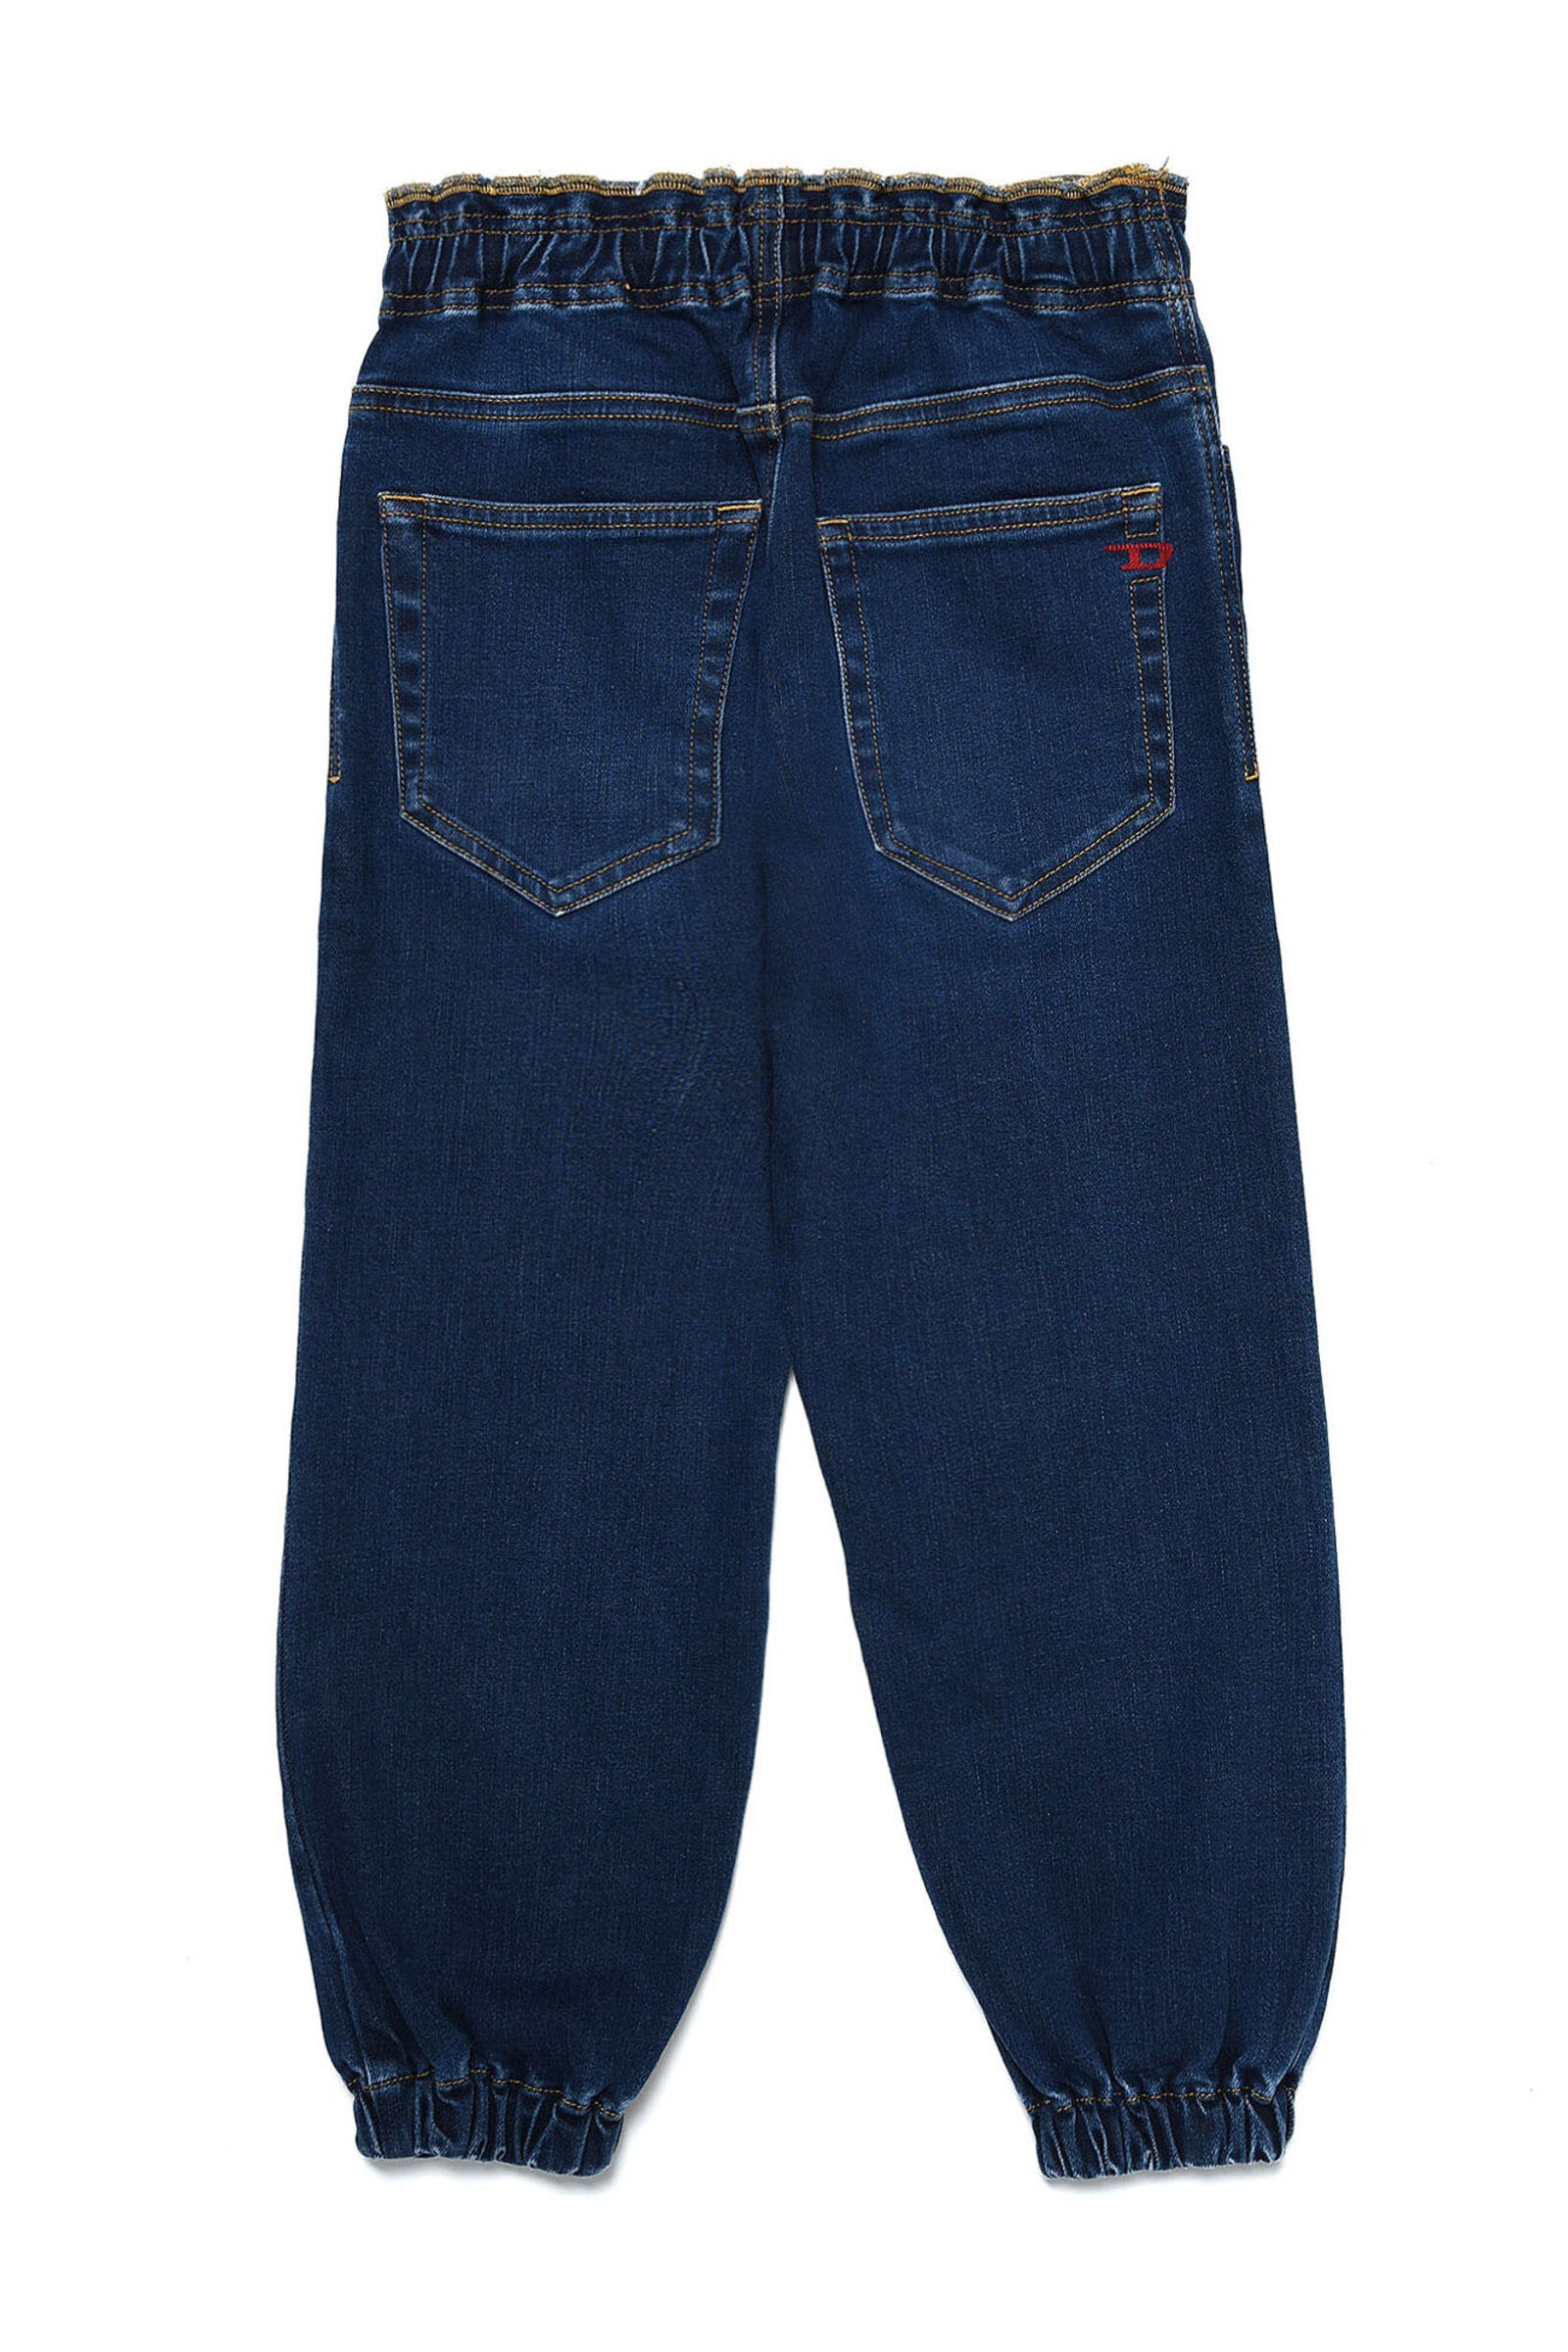 D-Mauri Straight Jeans azul suave al tacto 